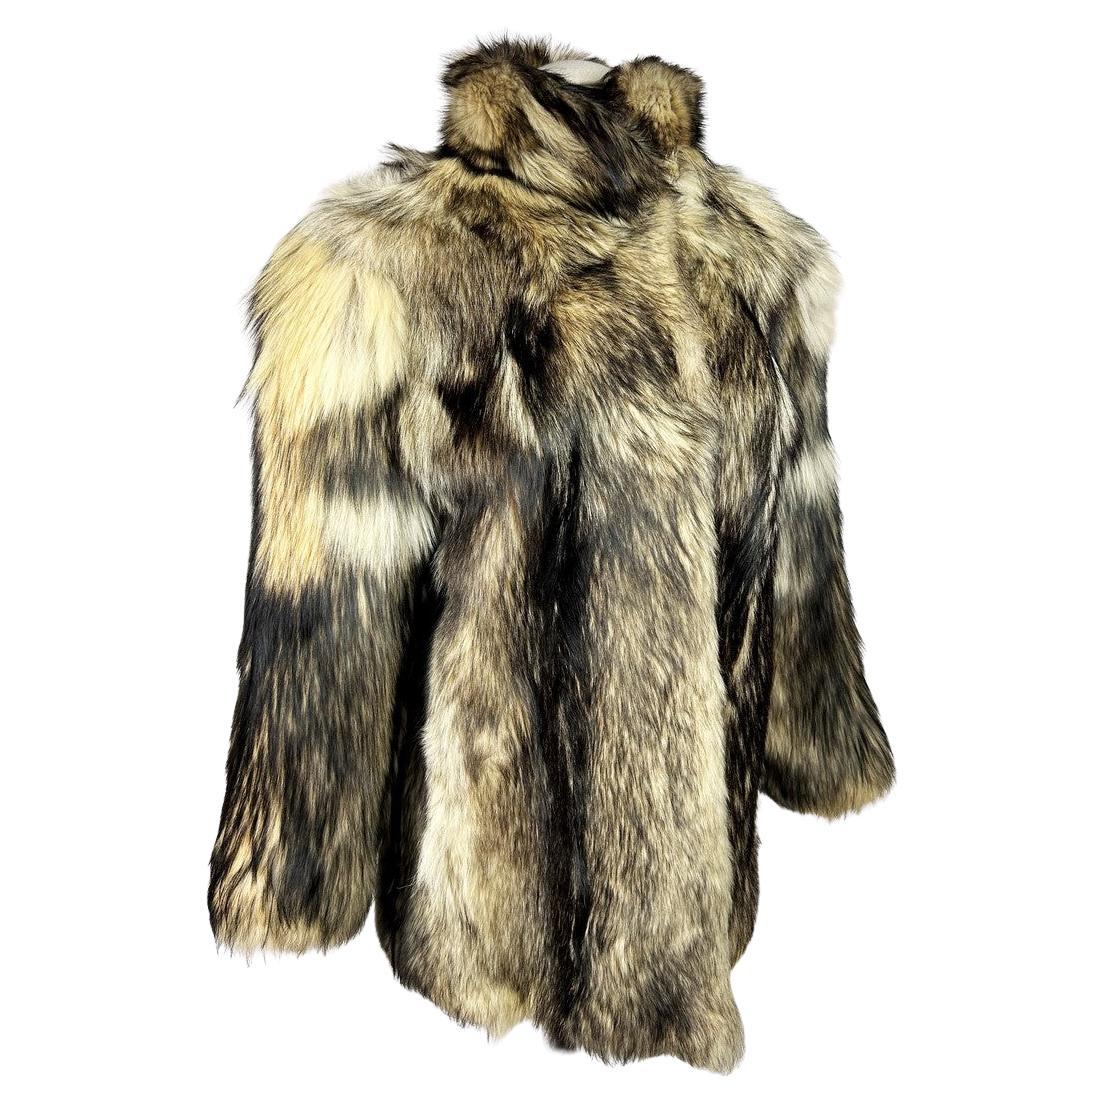 Marmot Fur Coat by Maison Colette - French Circa 1980 For Sale